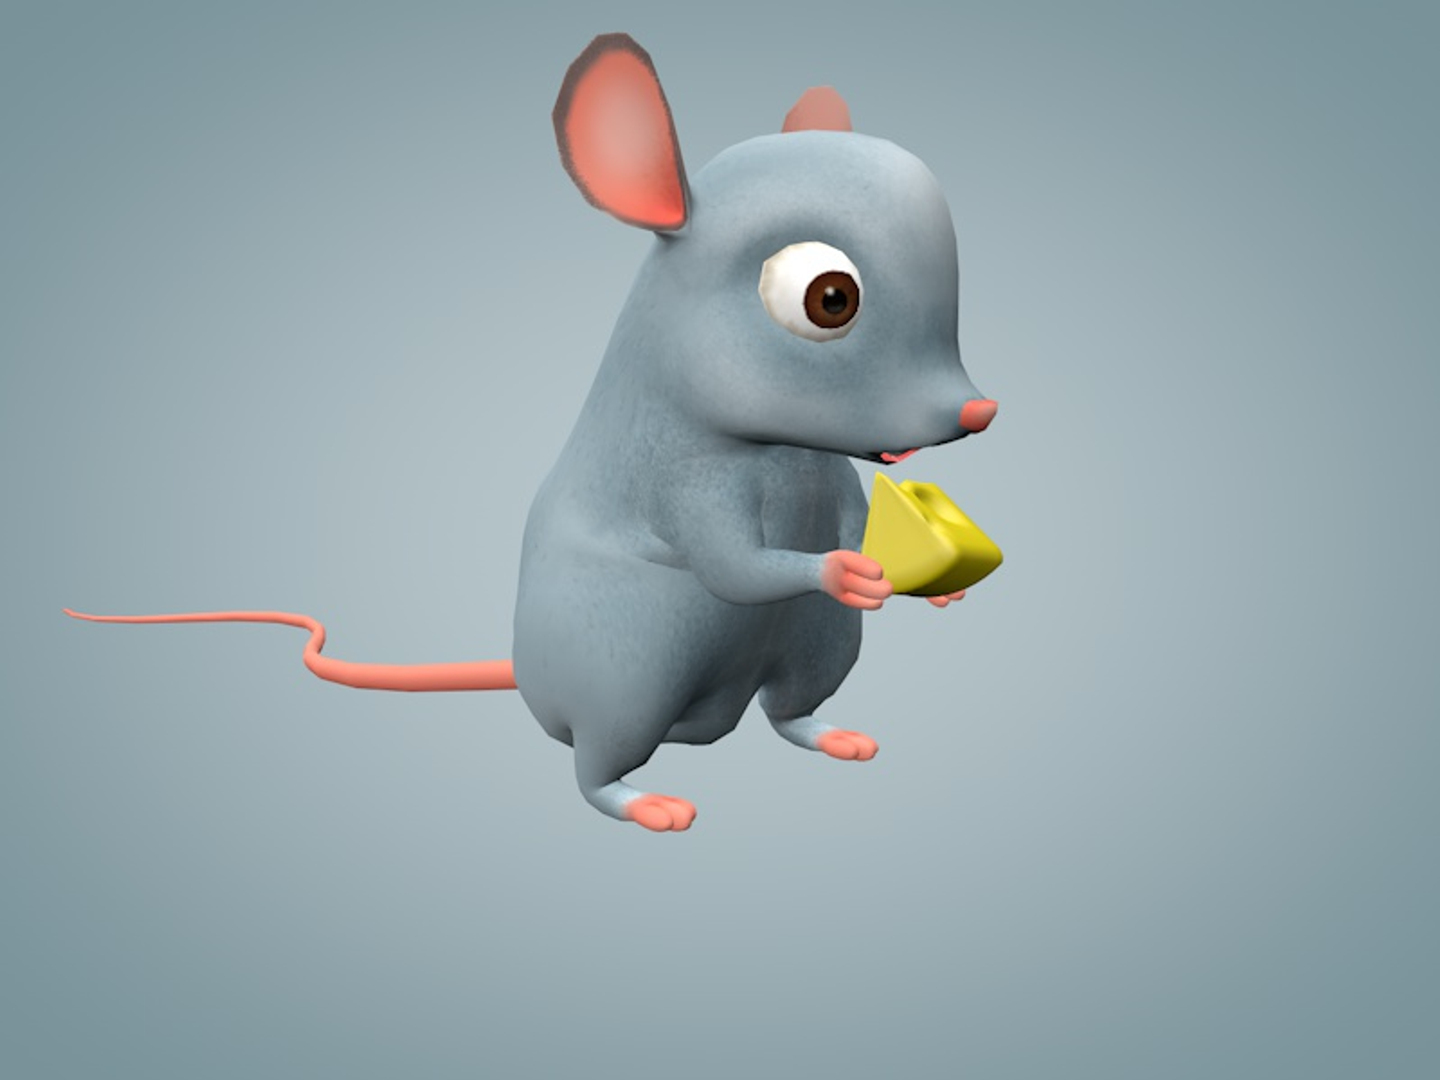 Включи 3 мыши. 3д мышка. Мышка 3d модель. Мышка для 3d моделирования. Мышонок 3д.